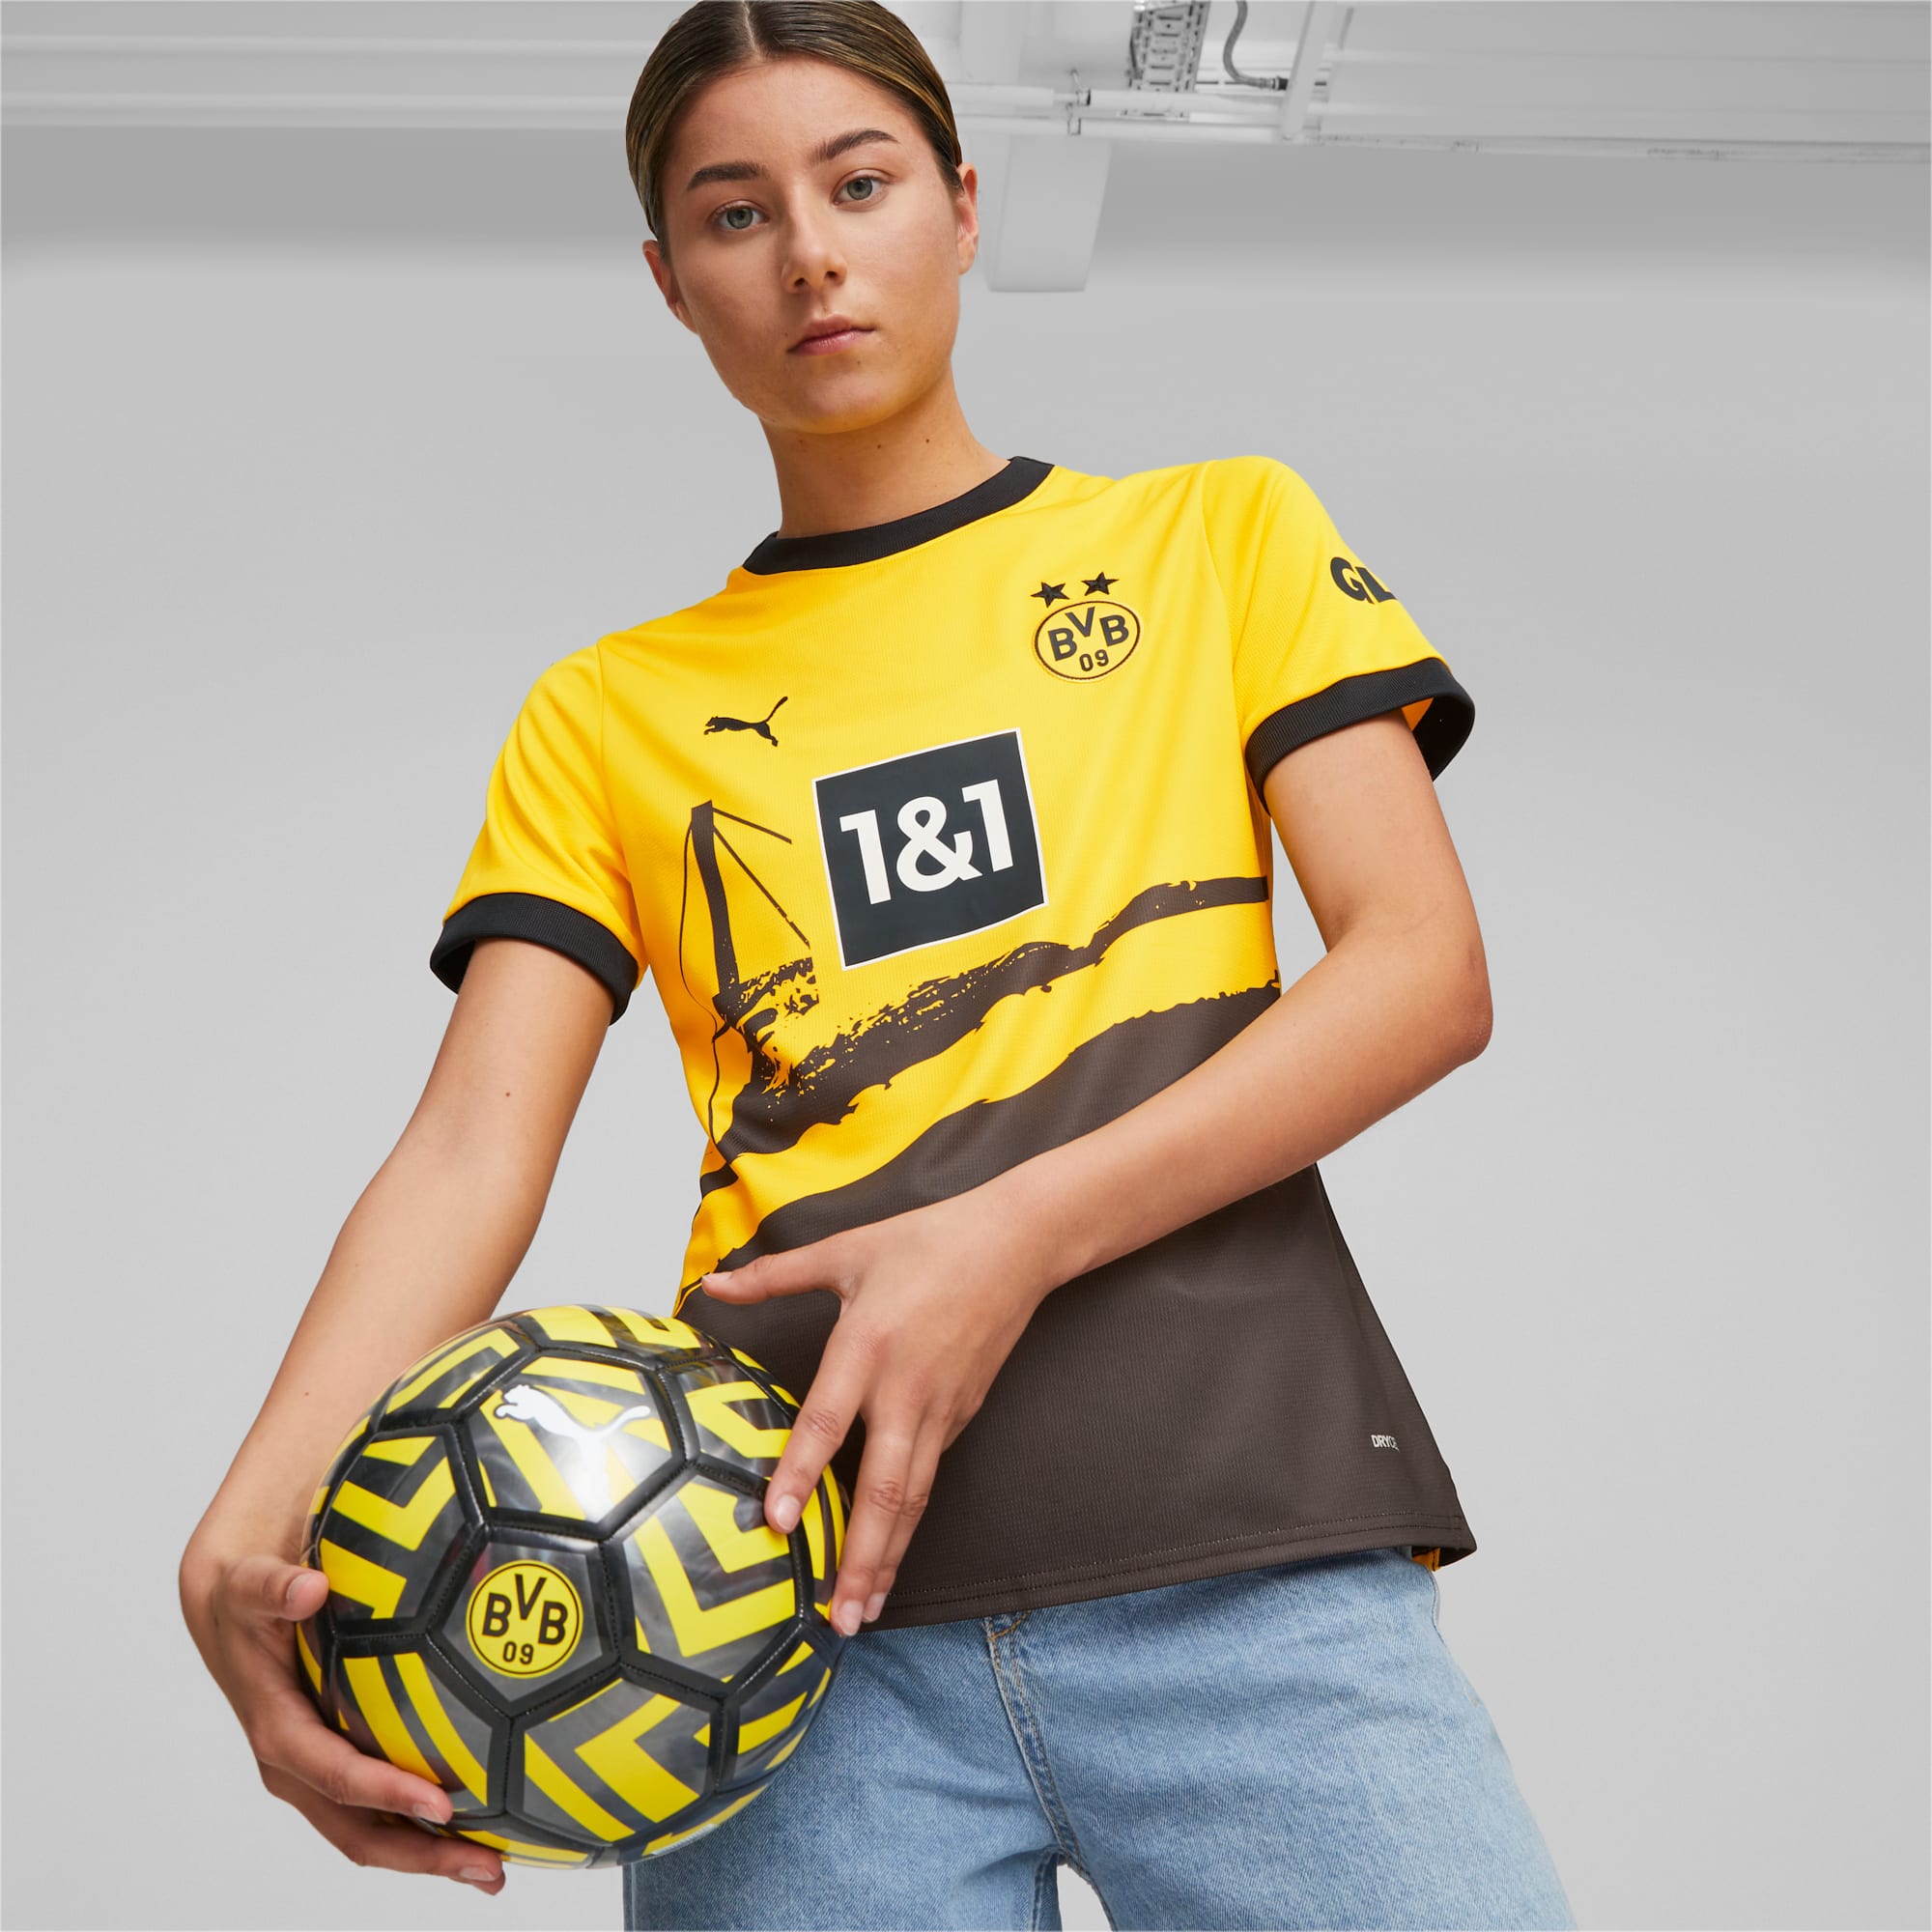 Borussia Dortmund  Camiseta borussia dortmund, Camisetas deportivas, Borussia  dortmund